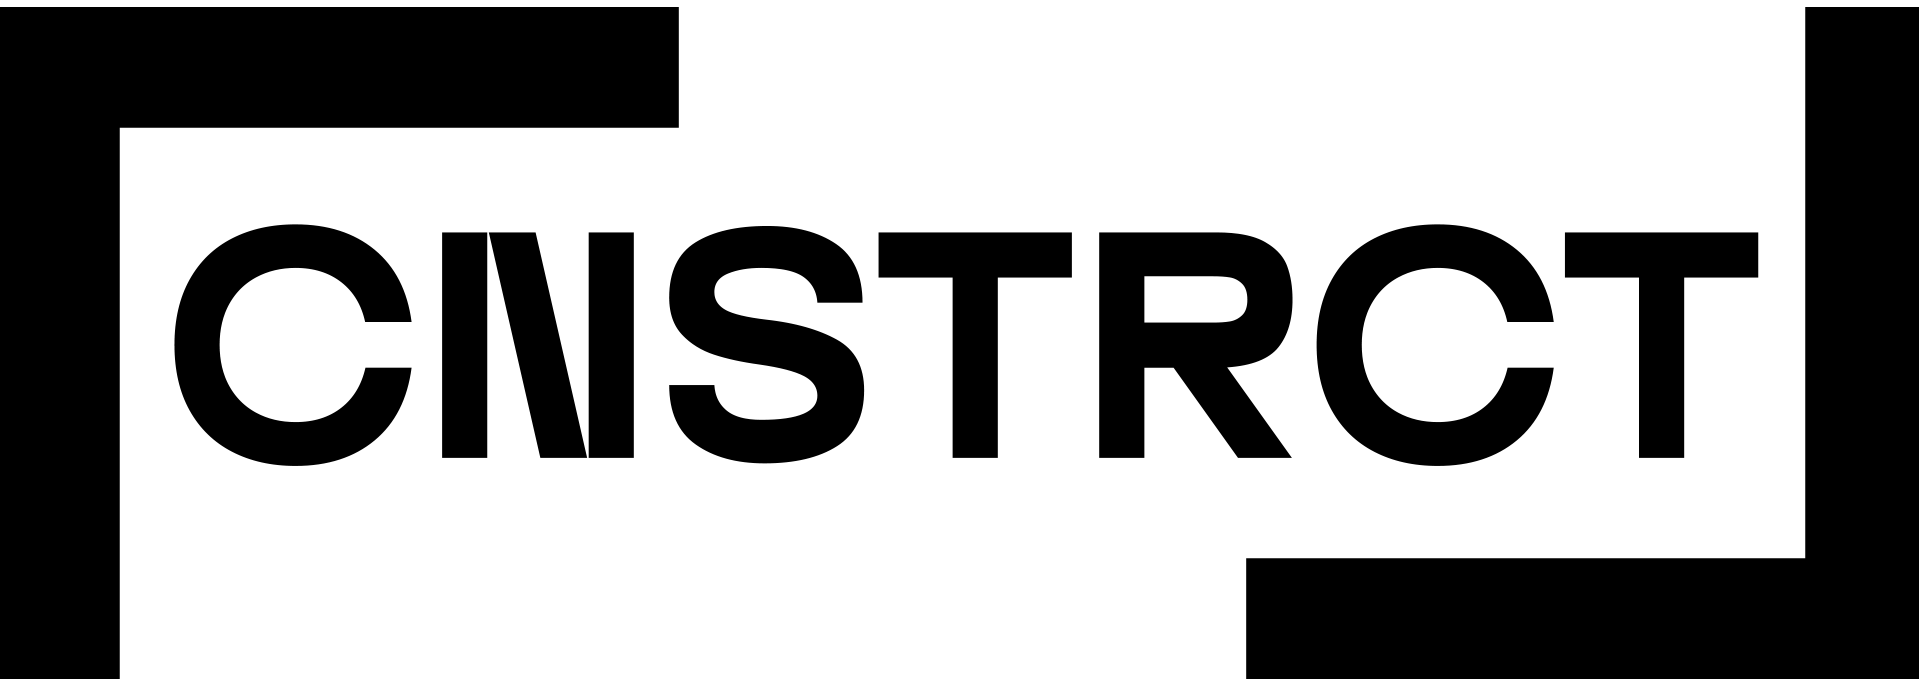 cnstrct-logo-black